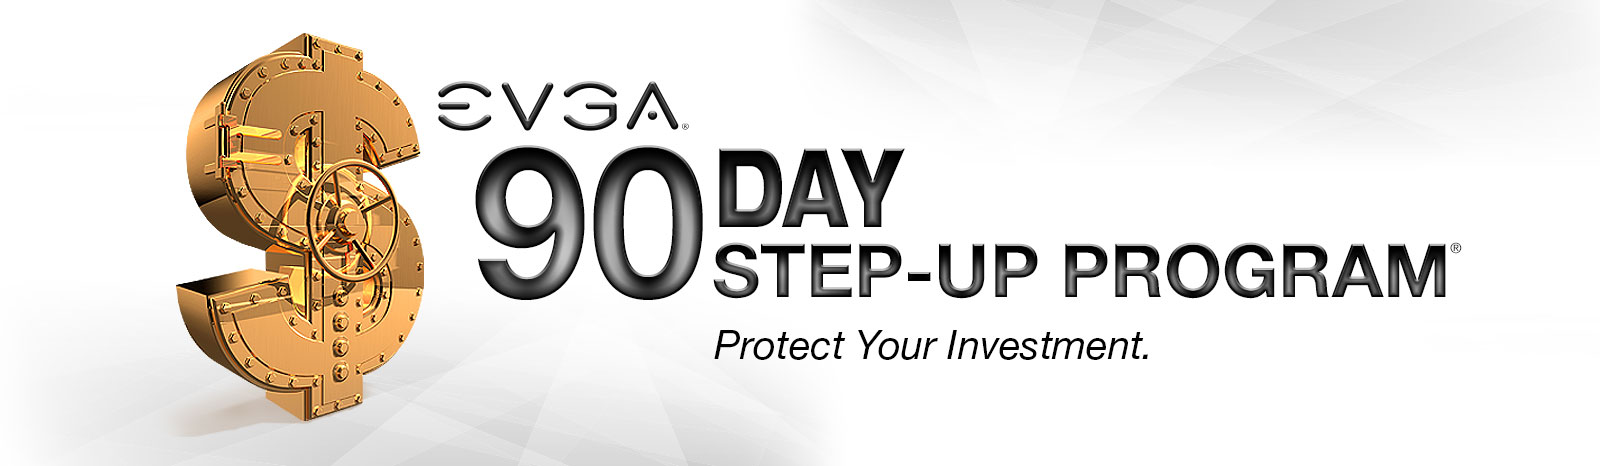 EVGA 90 Day Step-Up Program